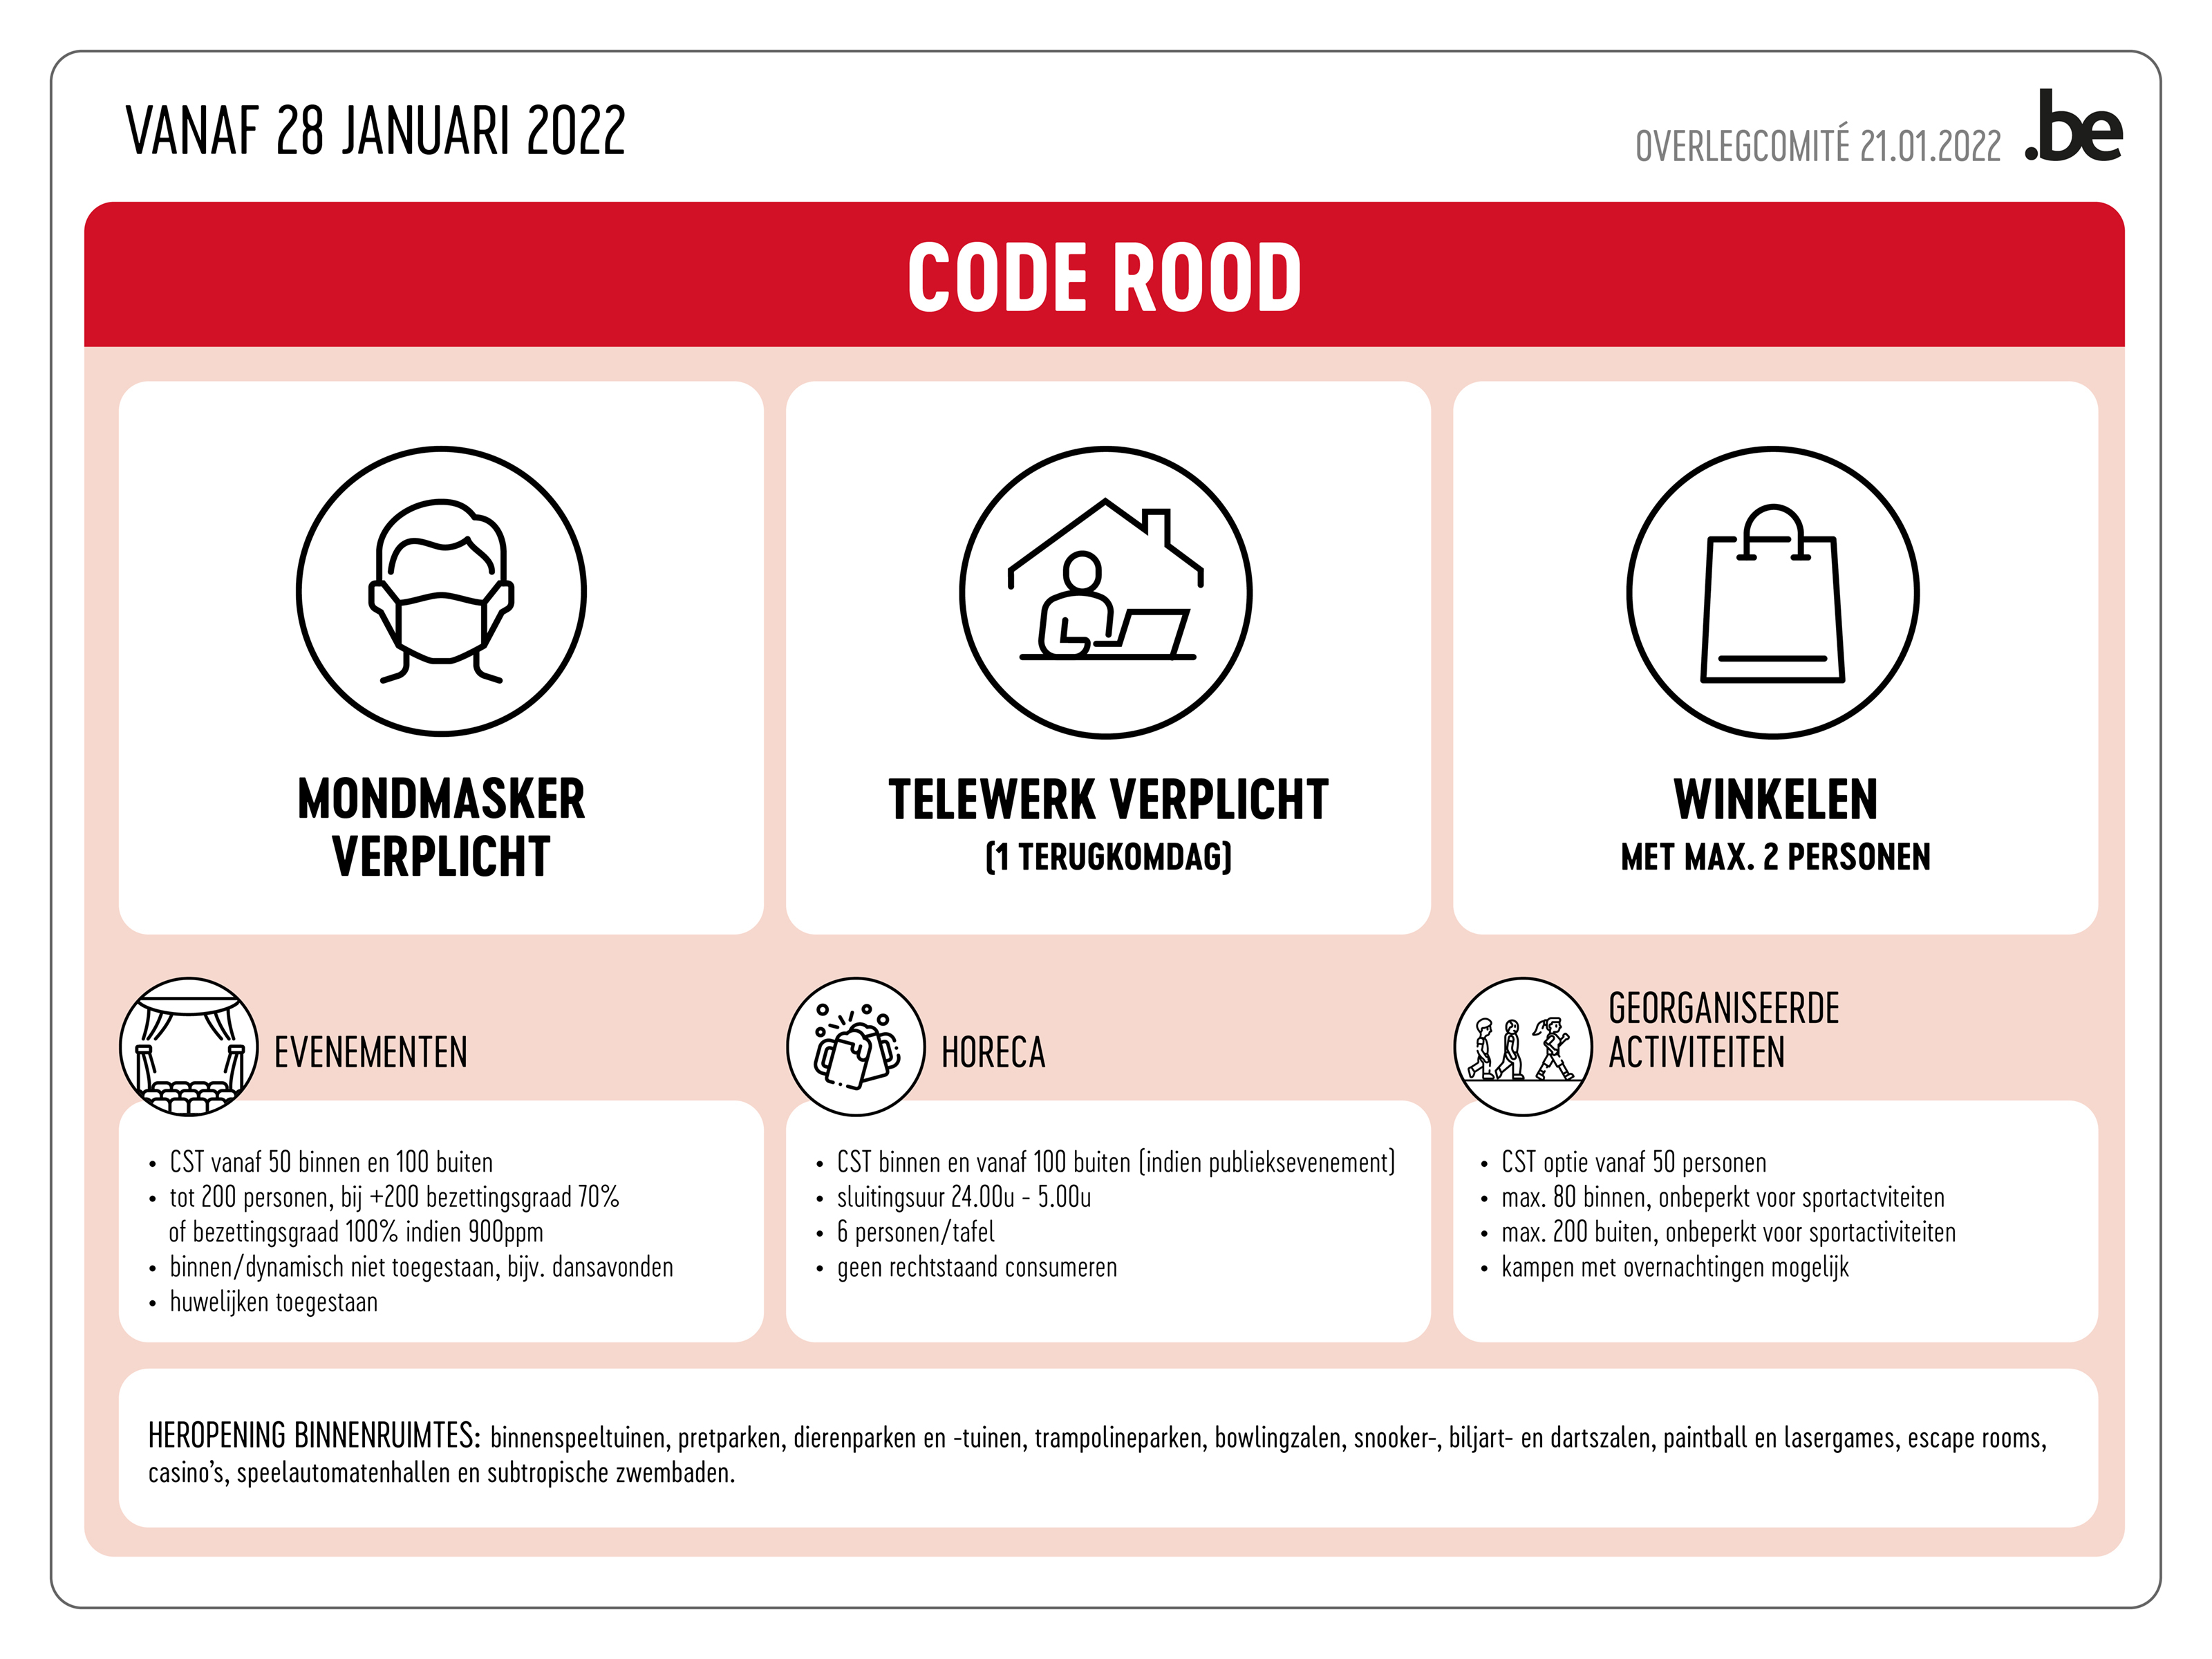 Code rood vanaf 28 januari 2022